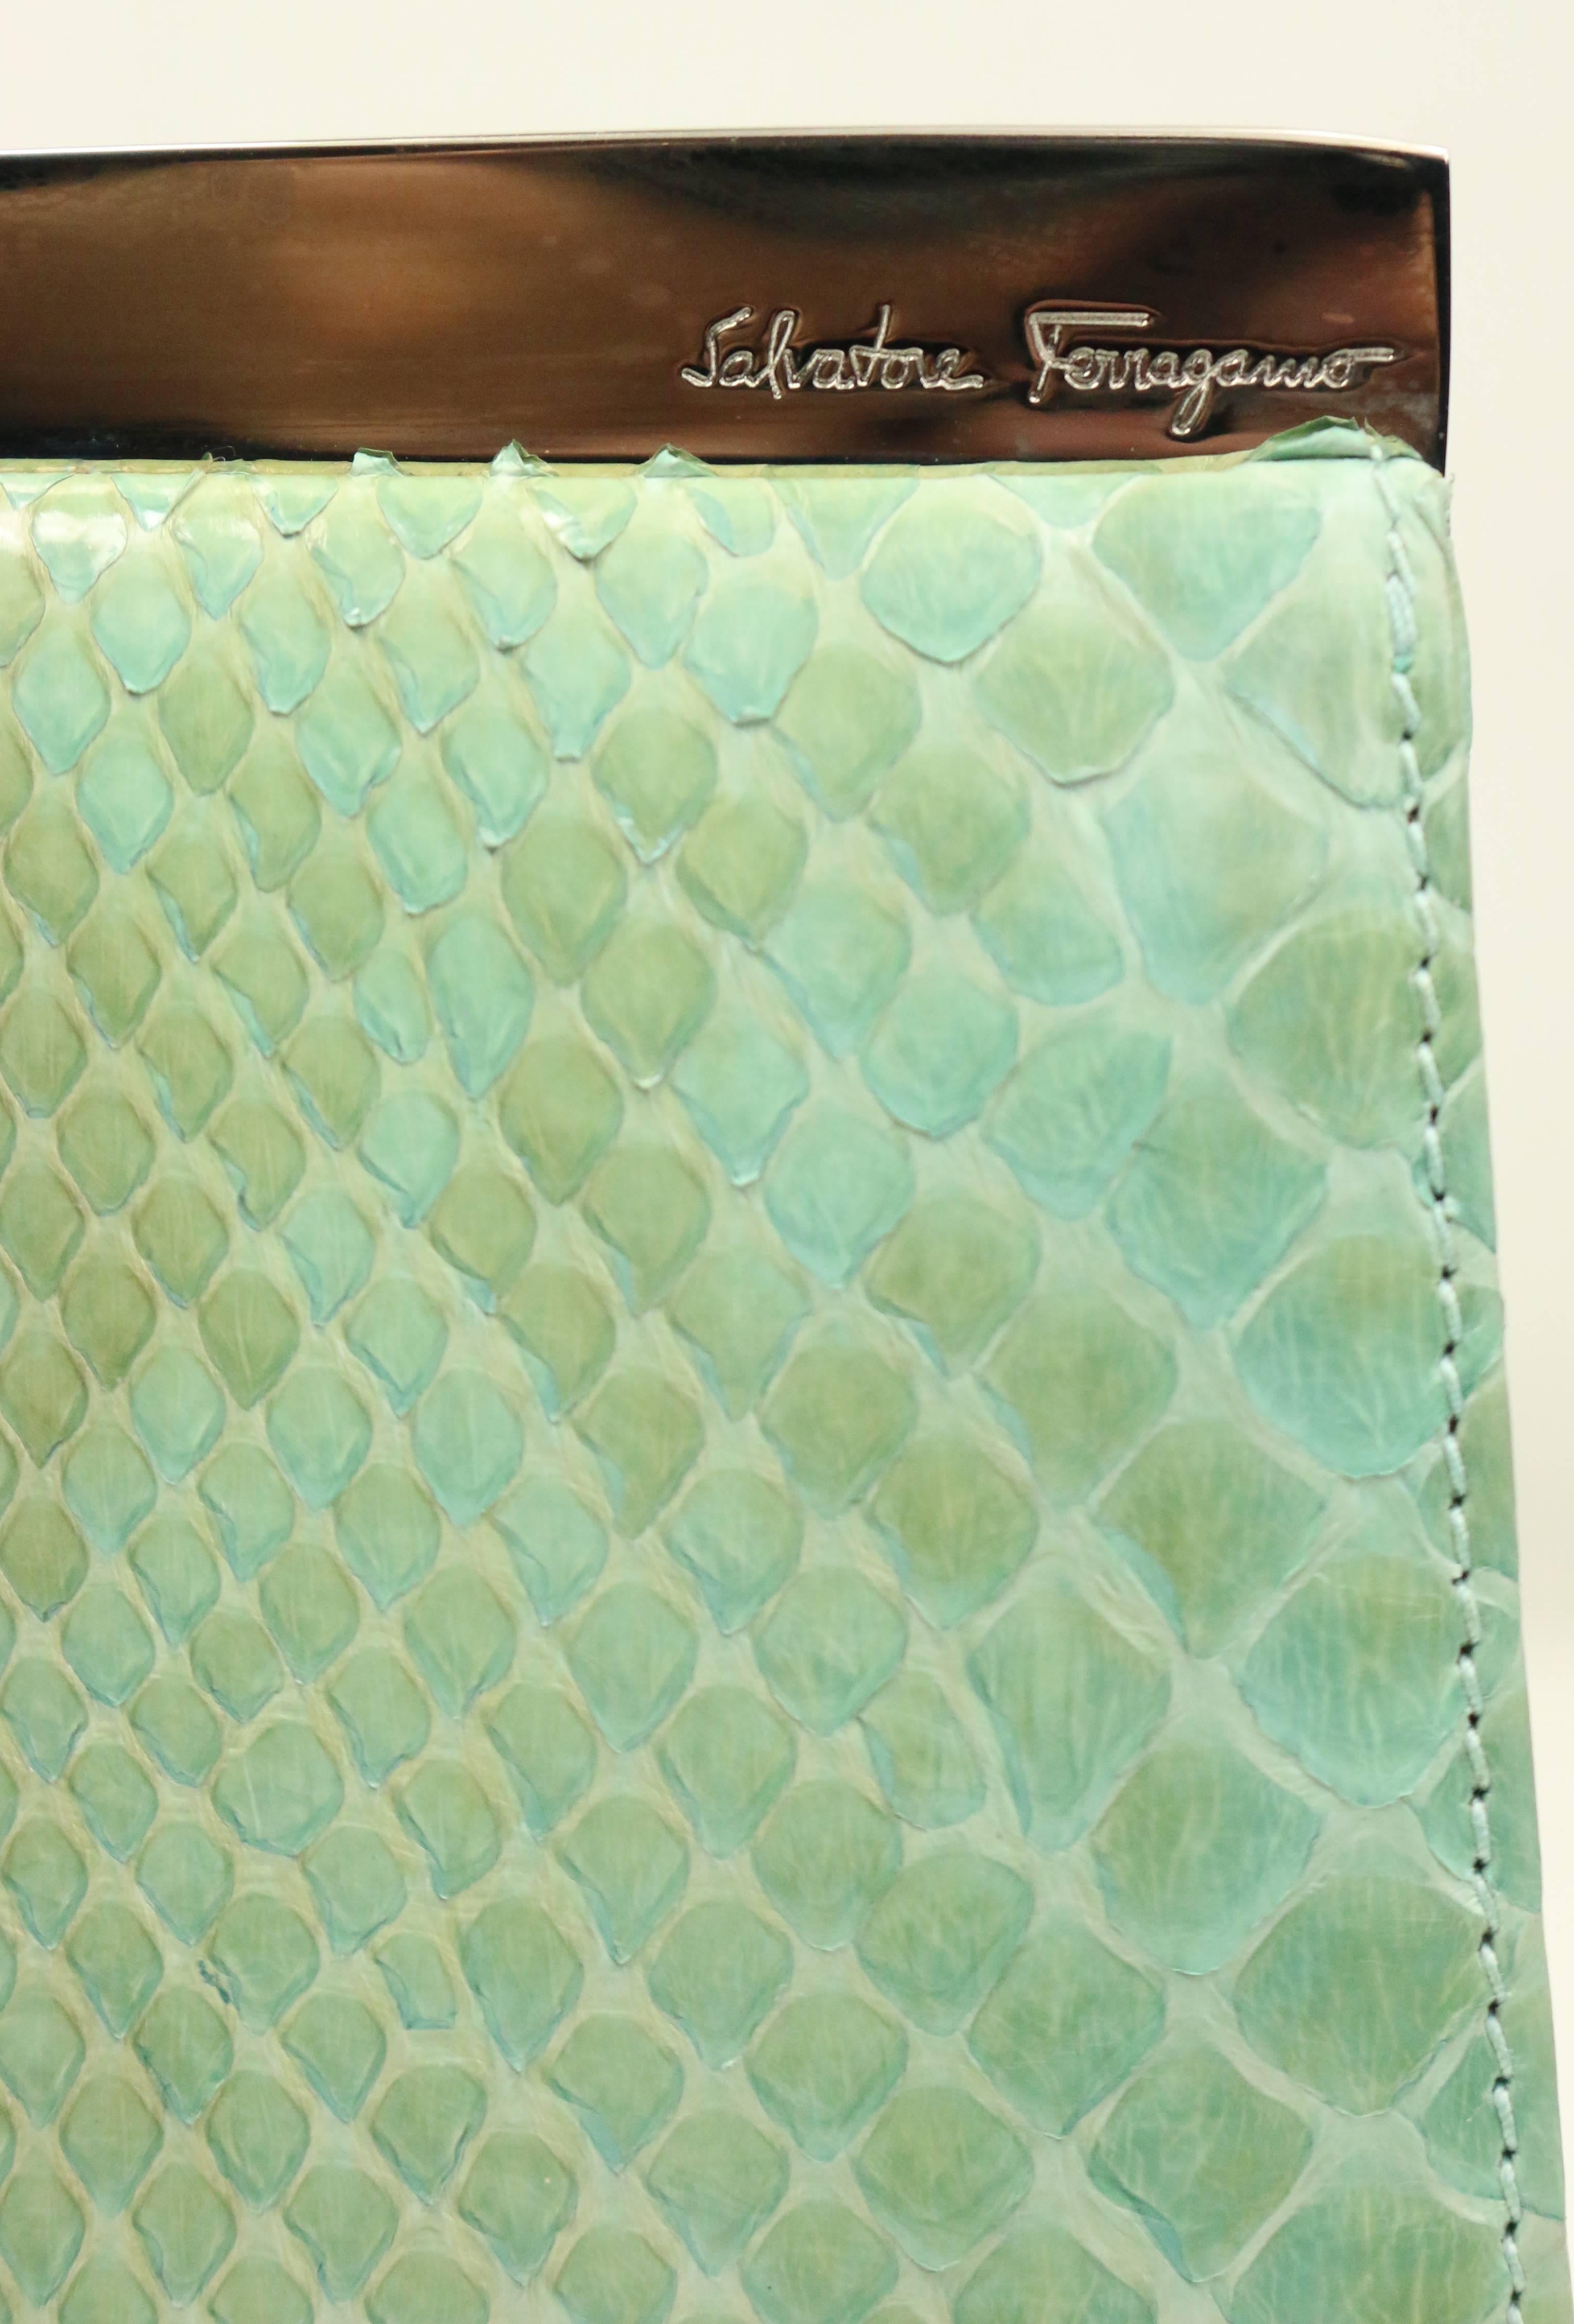 Salvatore Ferragamo Green Python Clutch bag  For Sale 2